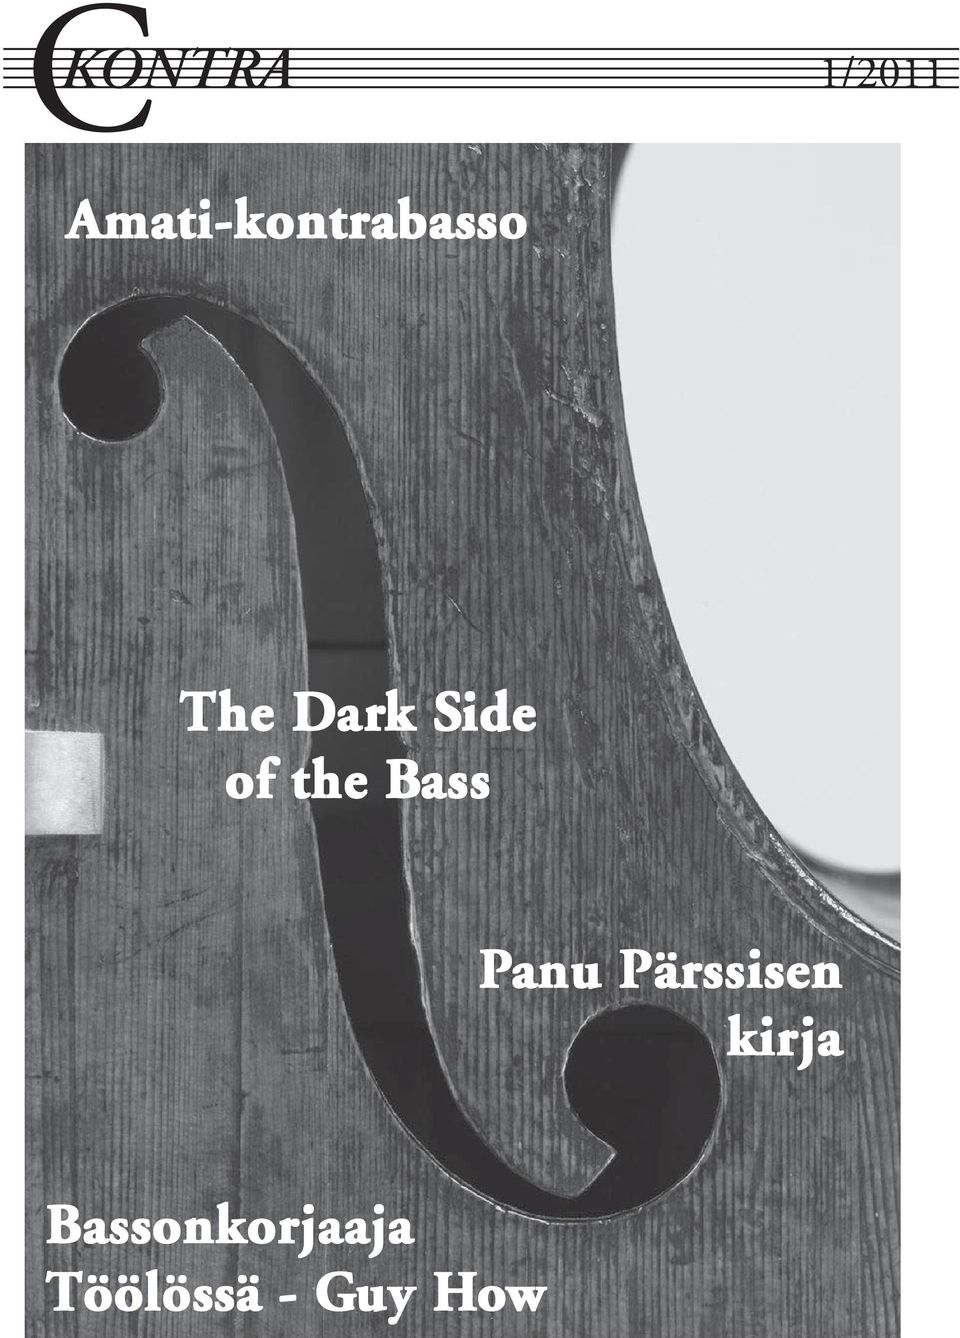 ark Side of the Bass Panu